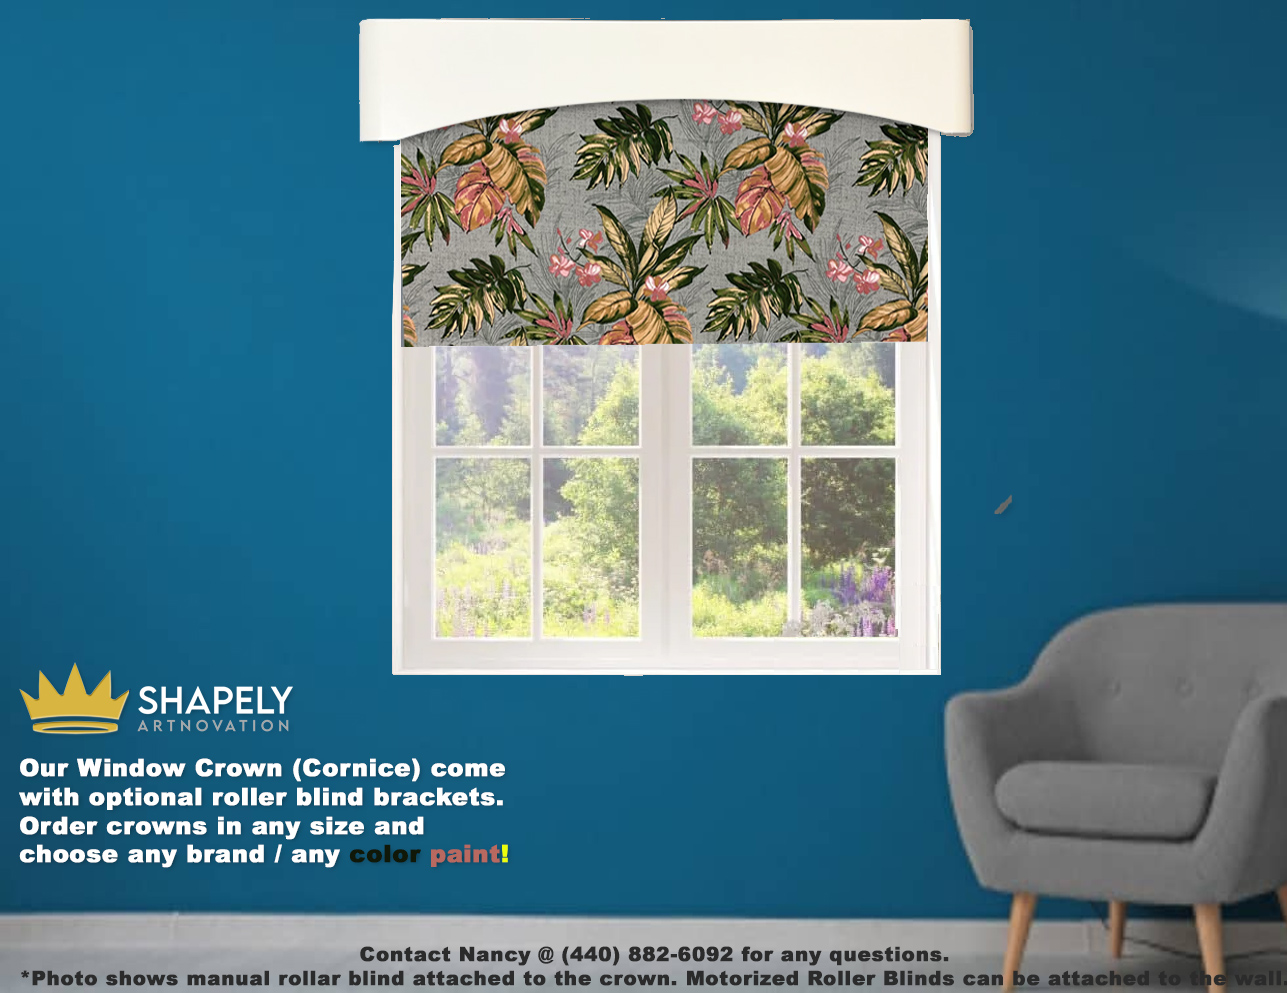 Shapely Artnovation - Designer Frames and Cornices for your Home